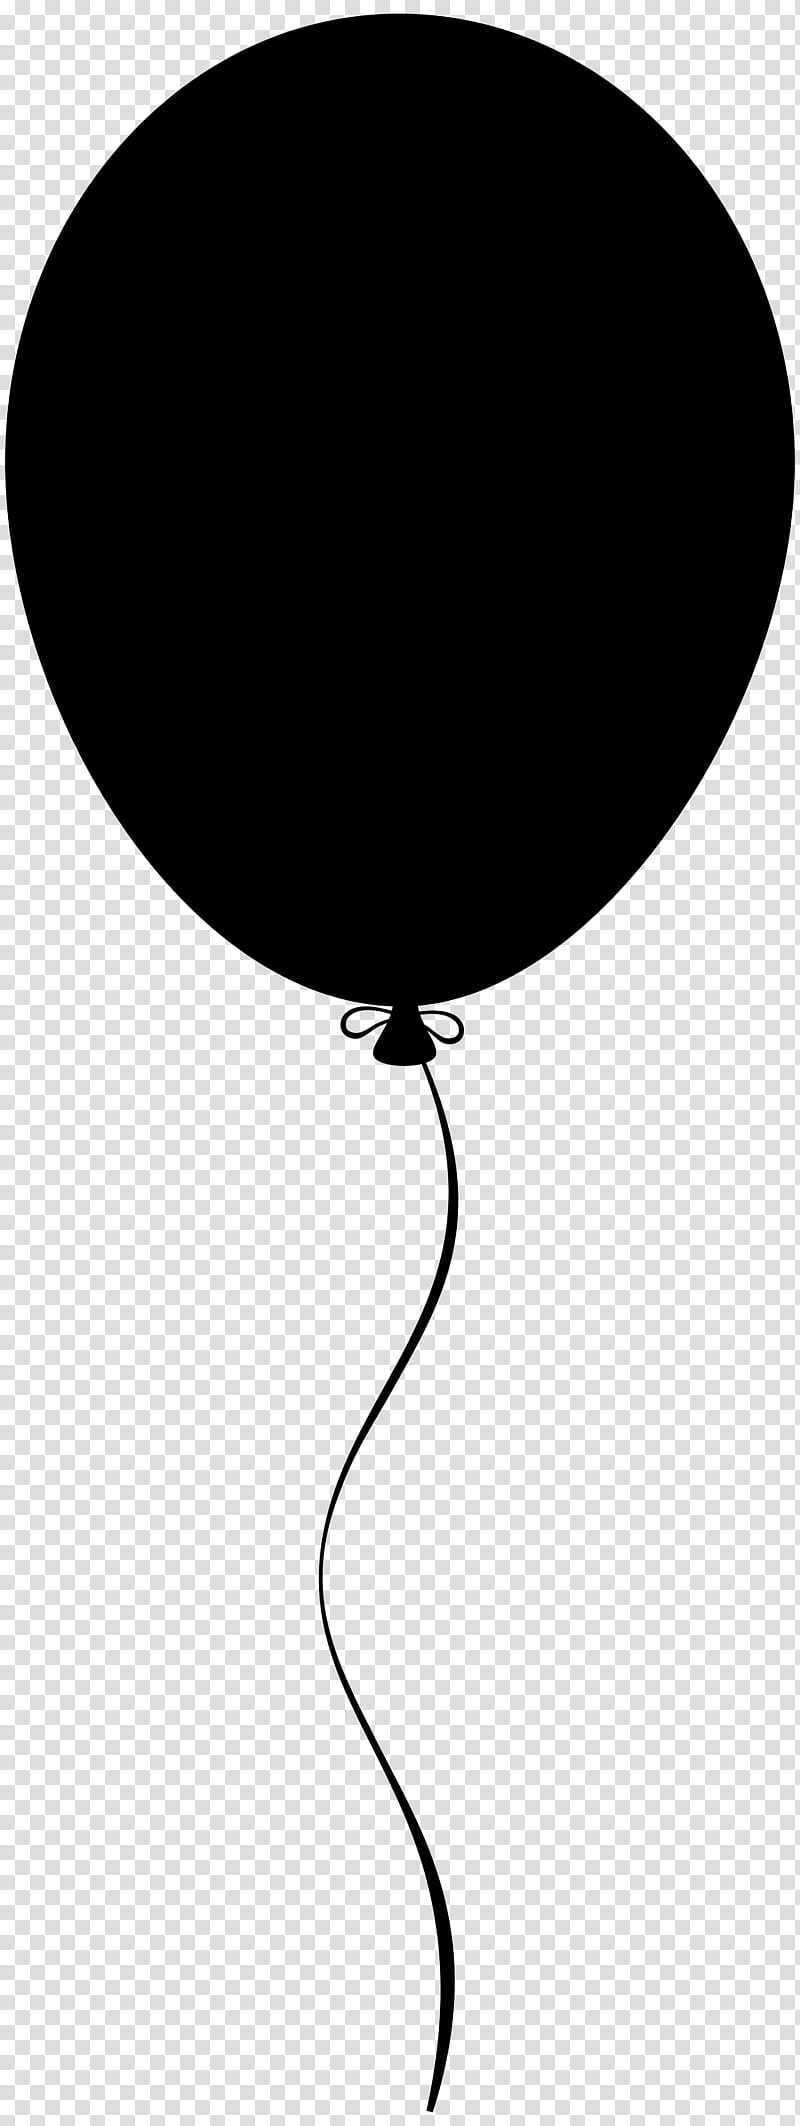 Black Line, Silhouette, Black M, Balloon, Blackandwhite transparent background PNG clipart